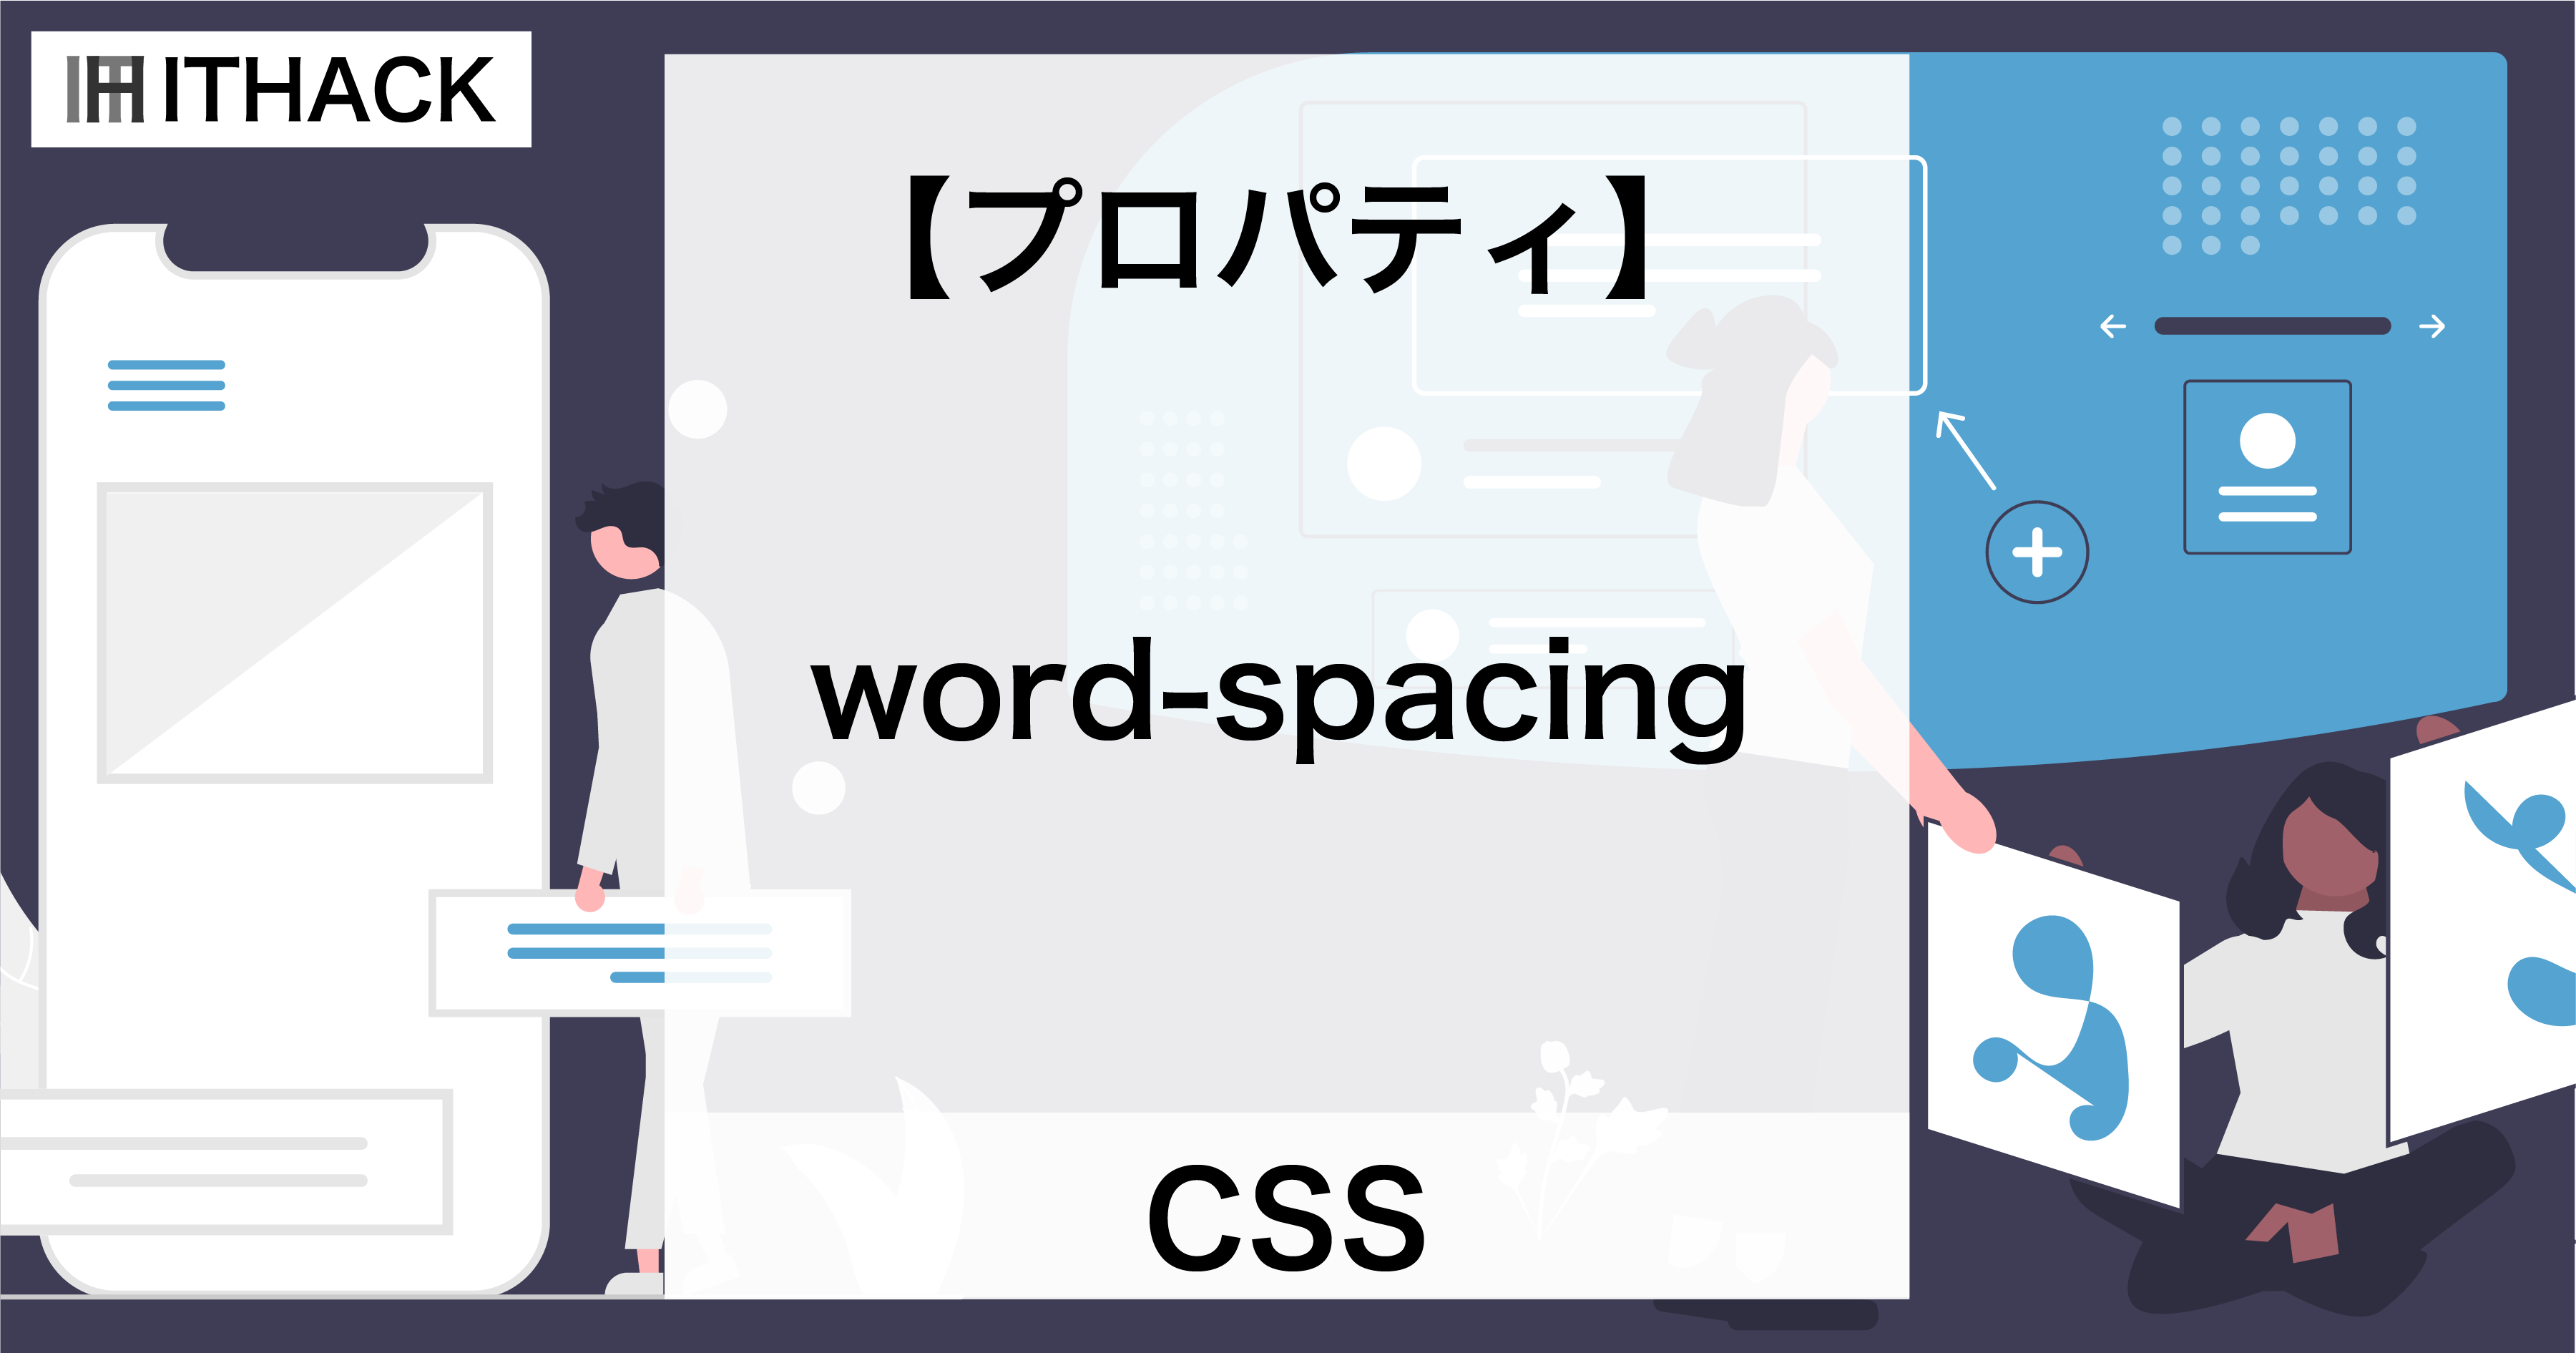 【CSS】word-spacing - 単語間のスペースサイズ